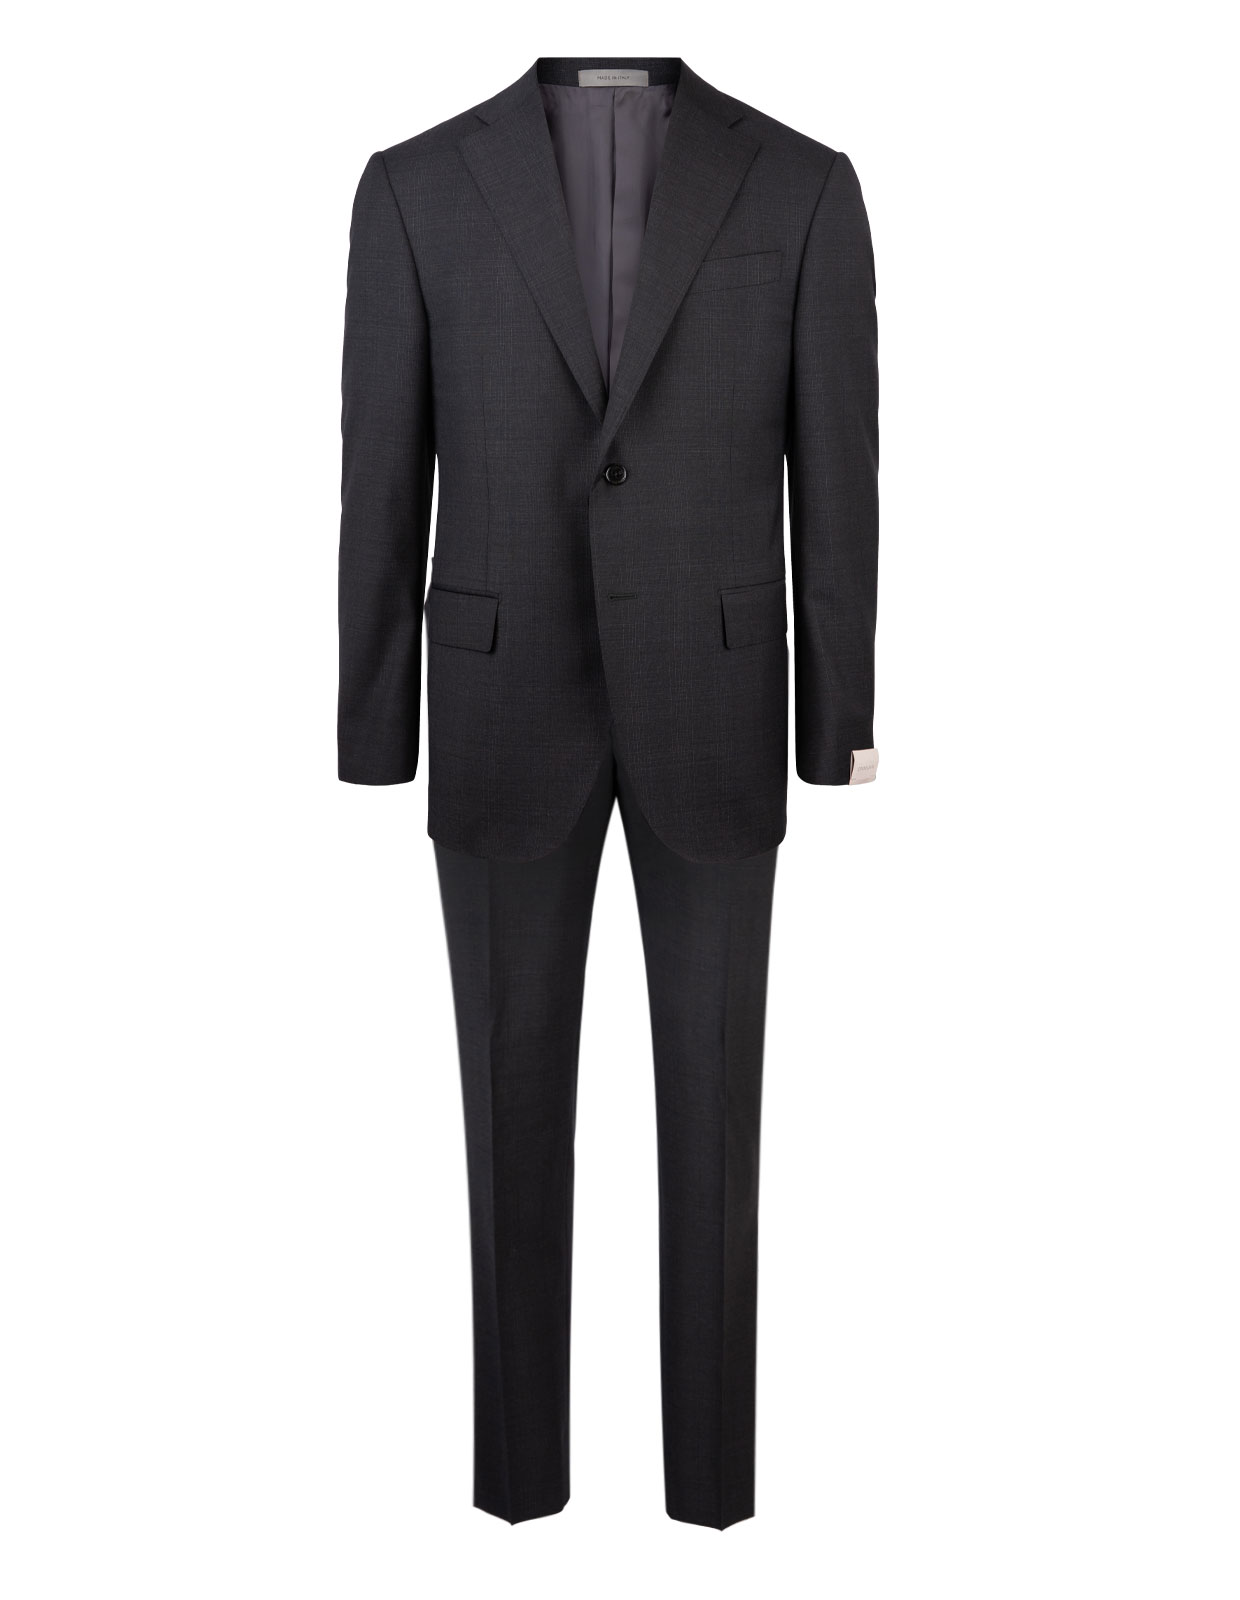 Leader Suit Wool Grey Check